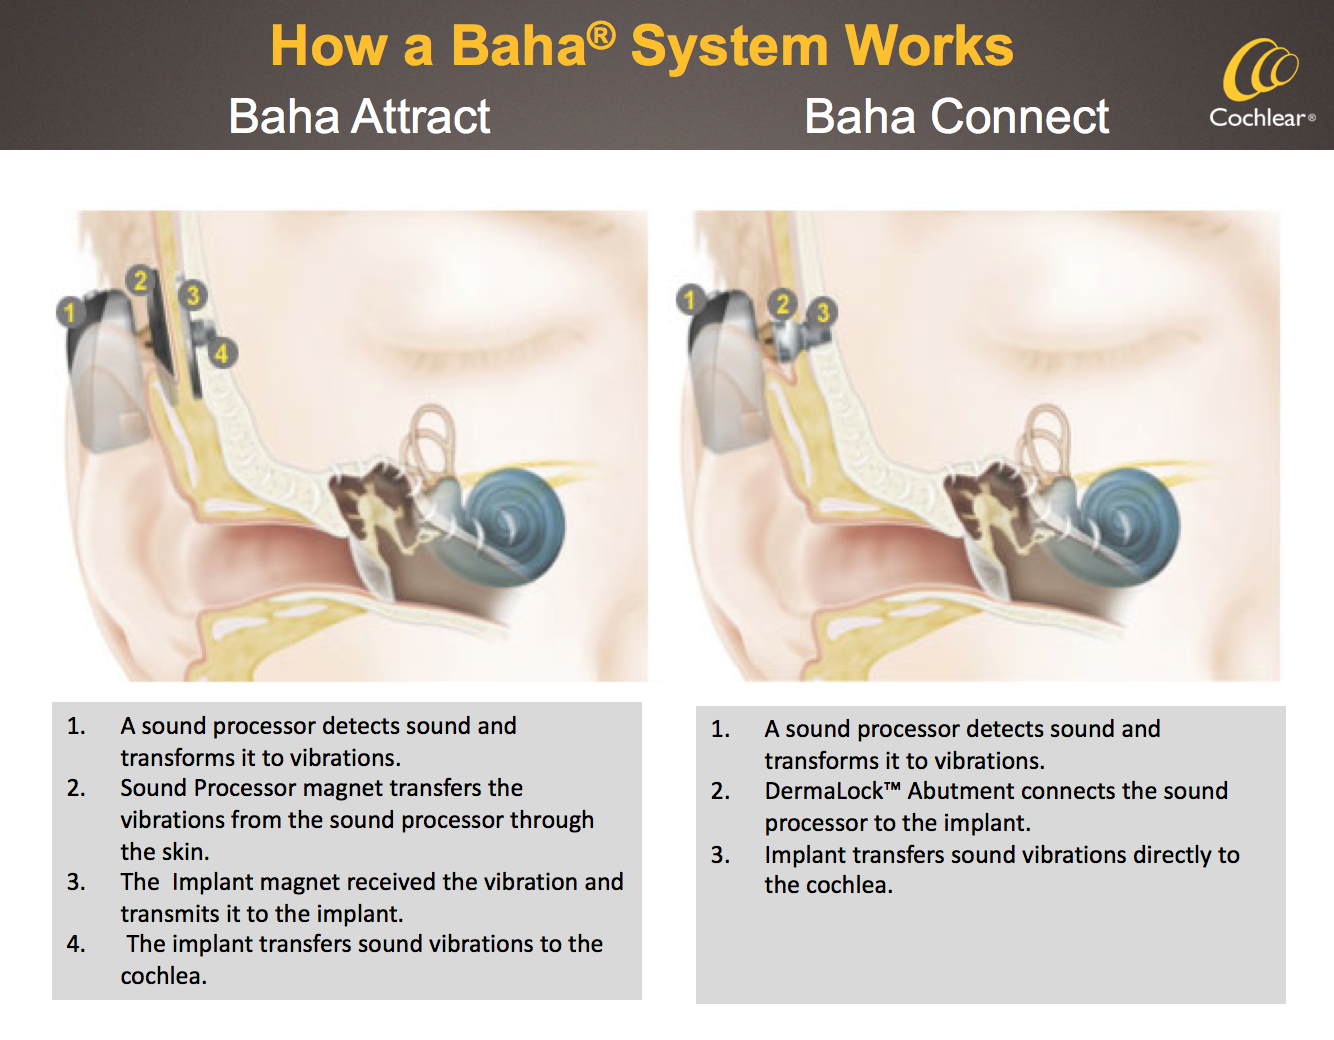 How a Baha System works